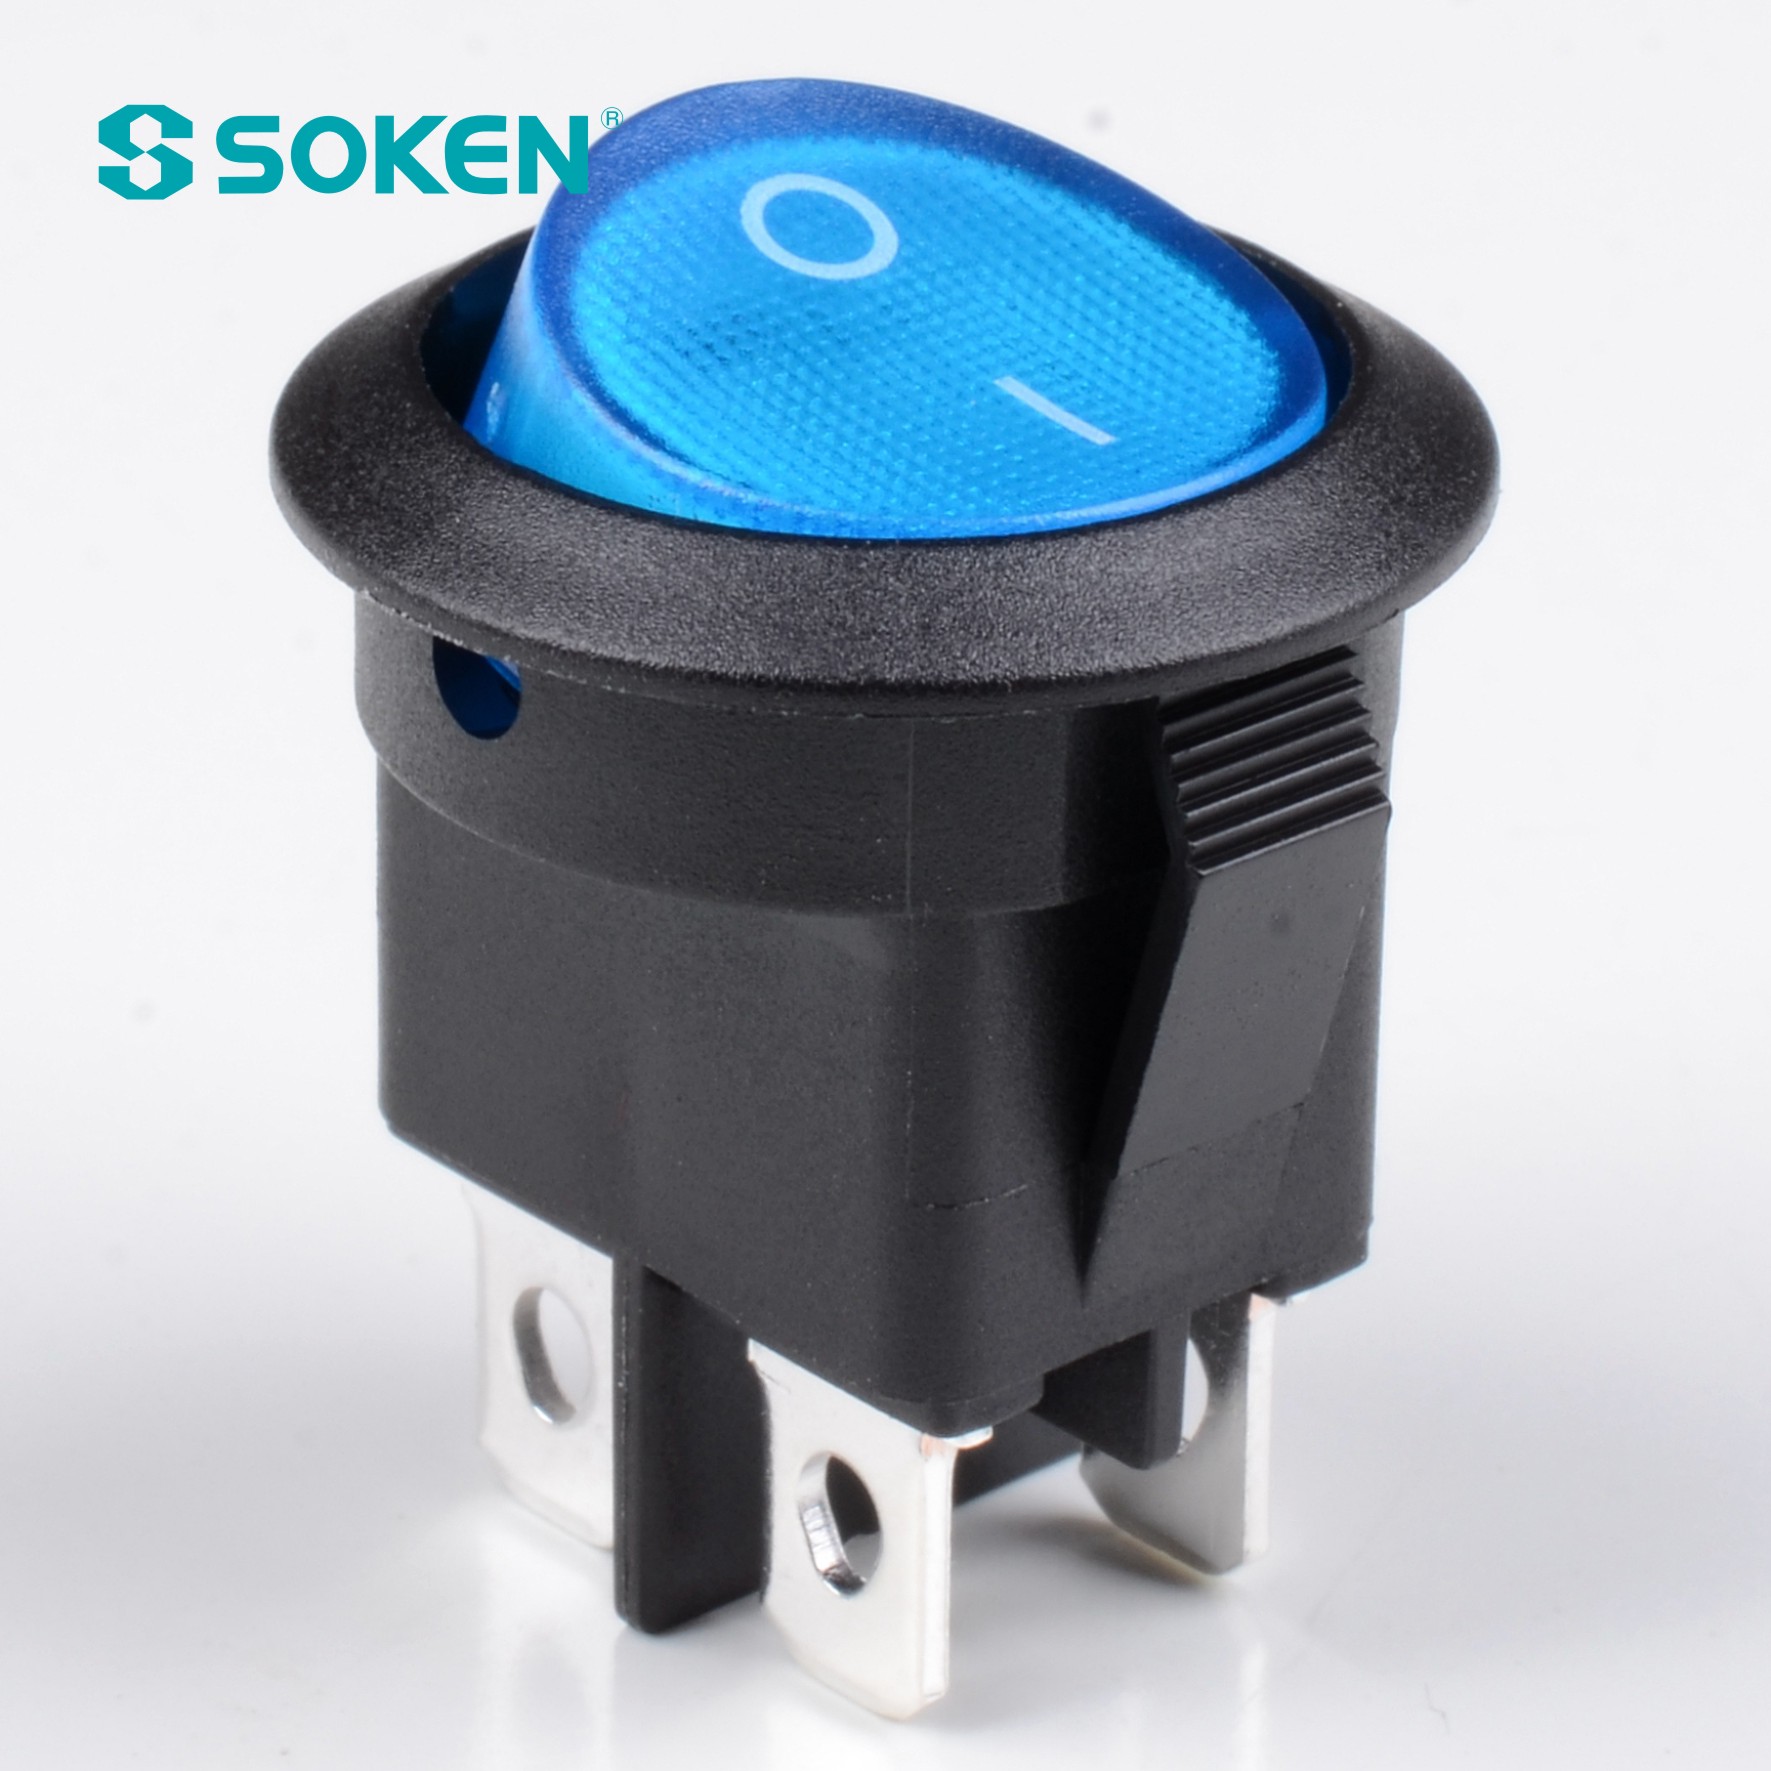 Interruptor oscilante redondo à prova d'água Soken Rk2-13c